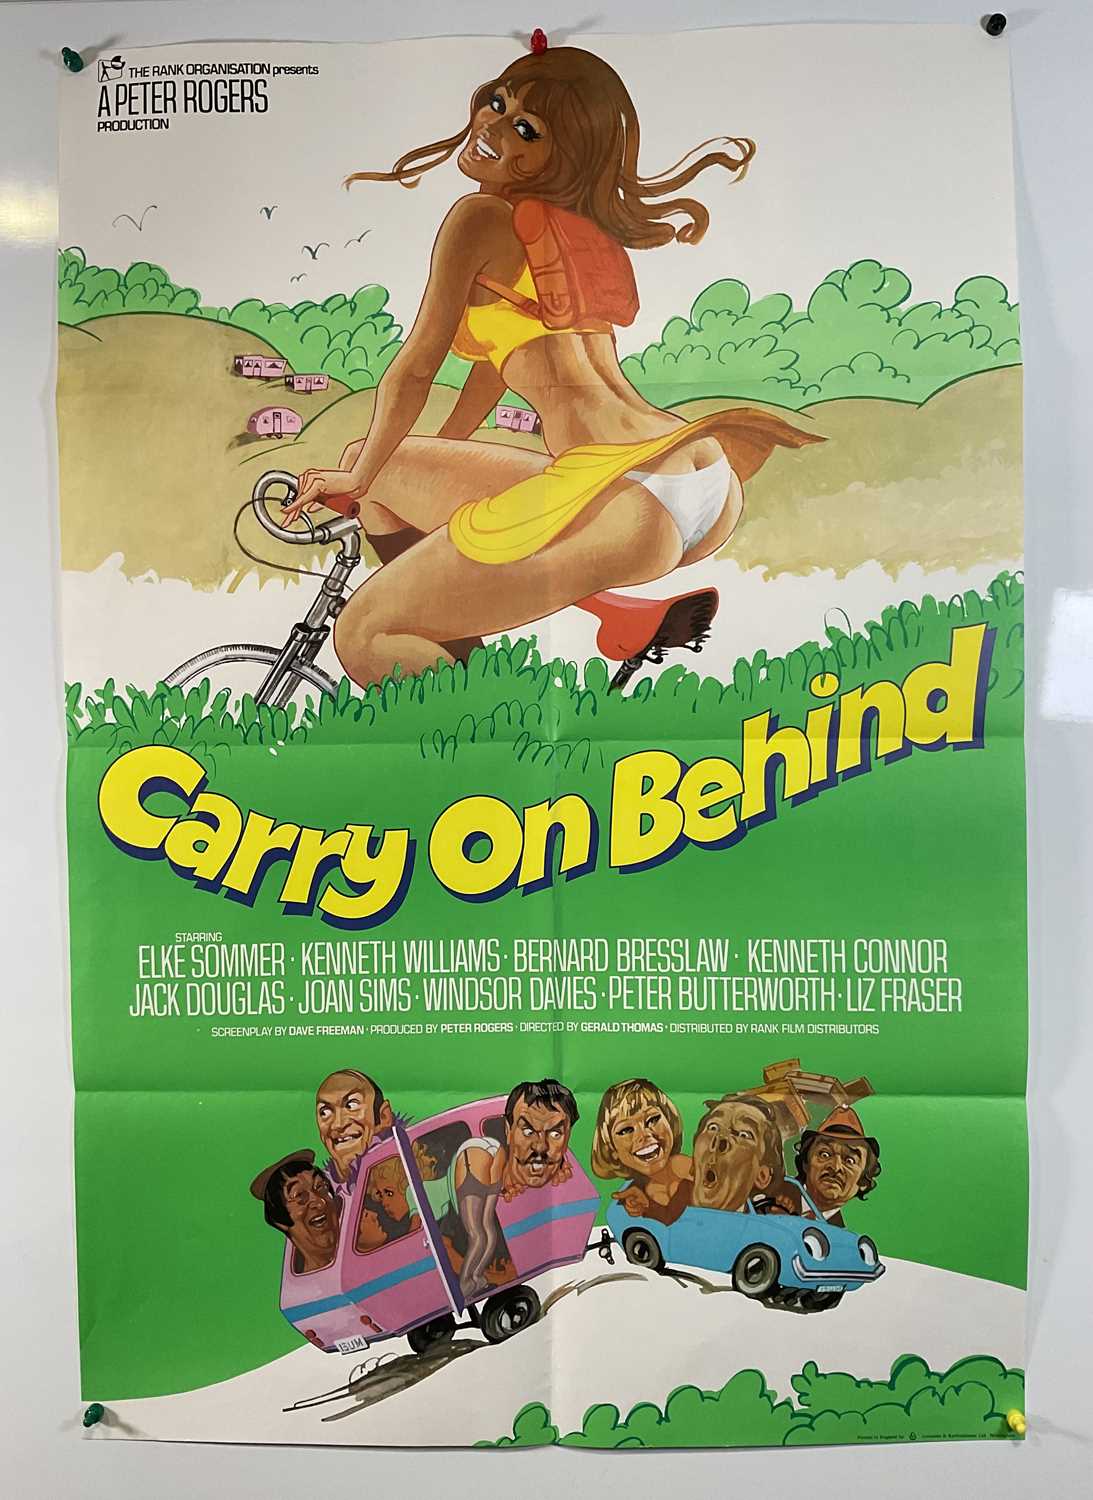 CARRY ON BEHIND (1975) UK one sheet movie poster, Arnaldo Putzu artwork, folded.